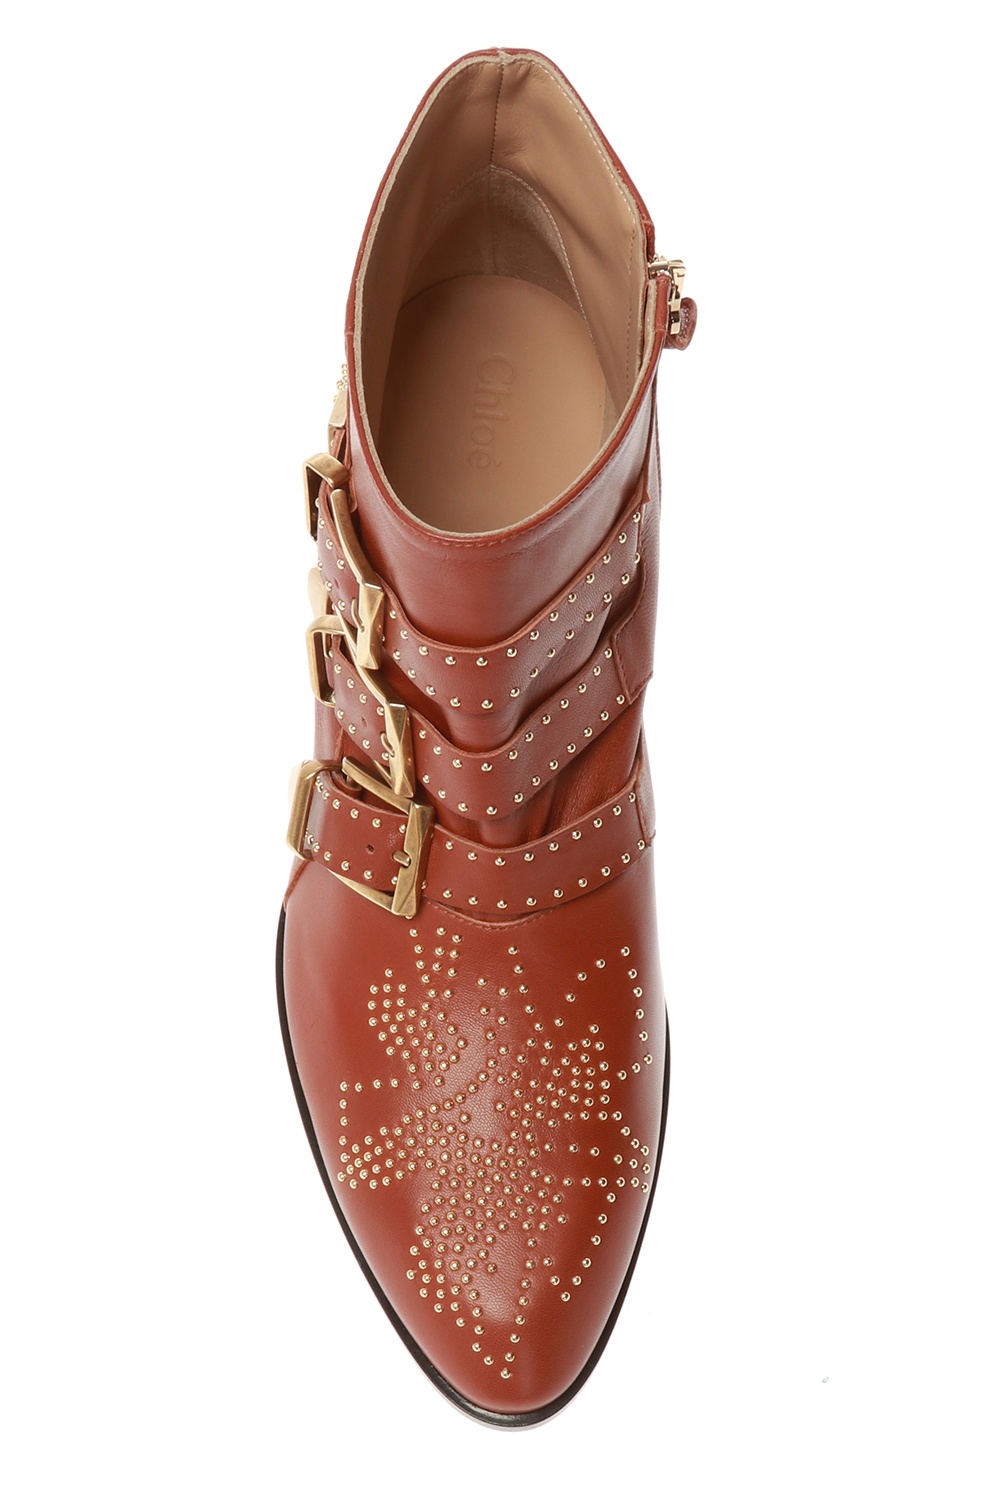 Chloé 'Susanna' leather ankle boots